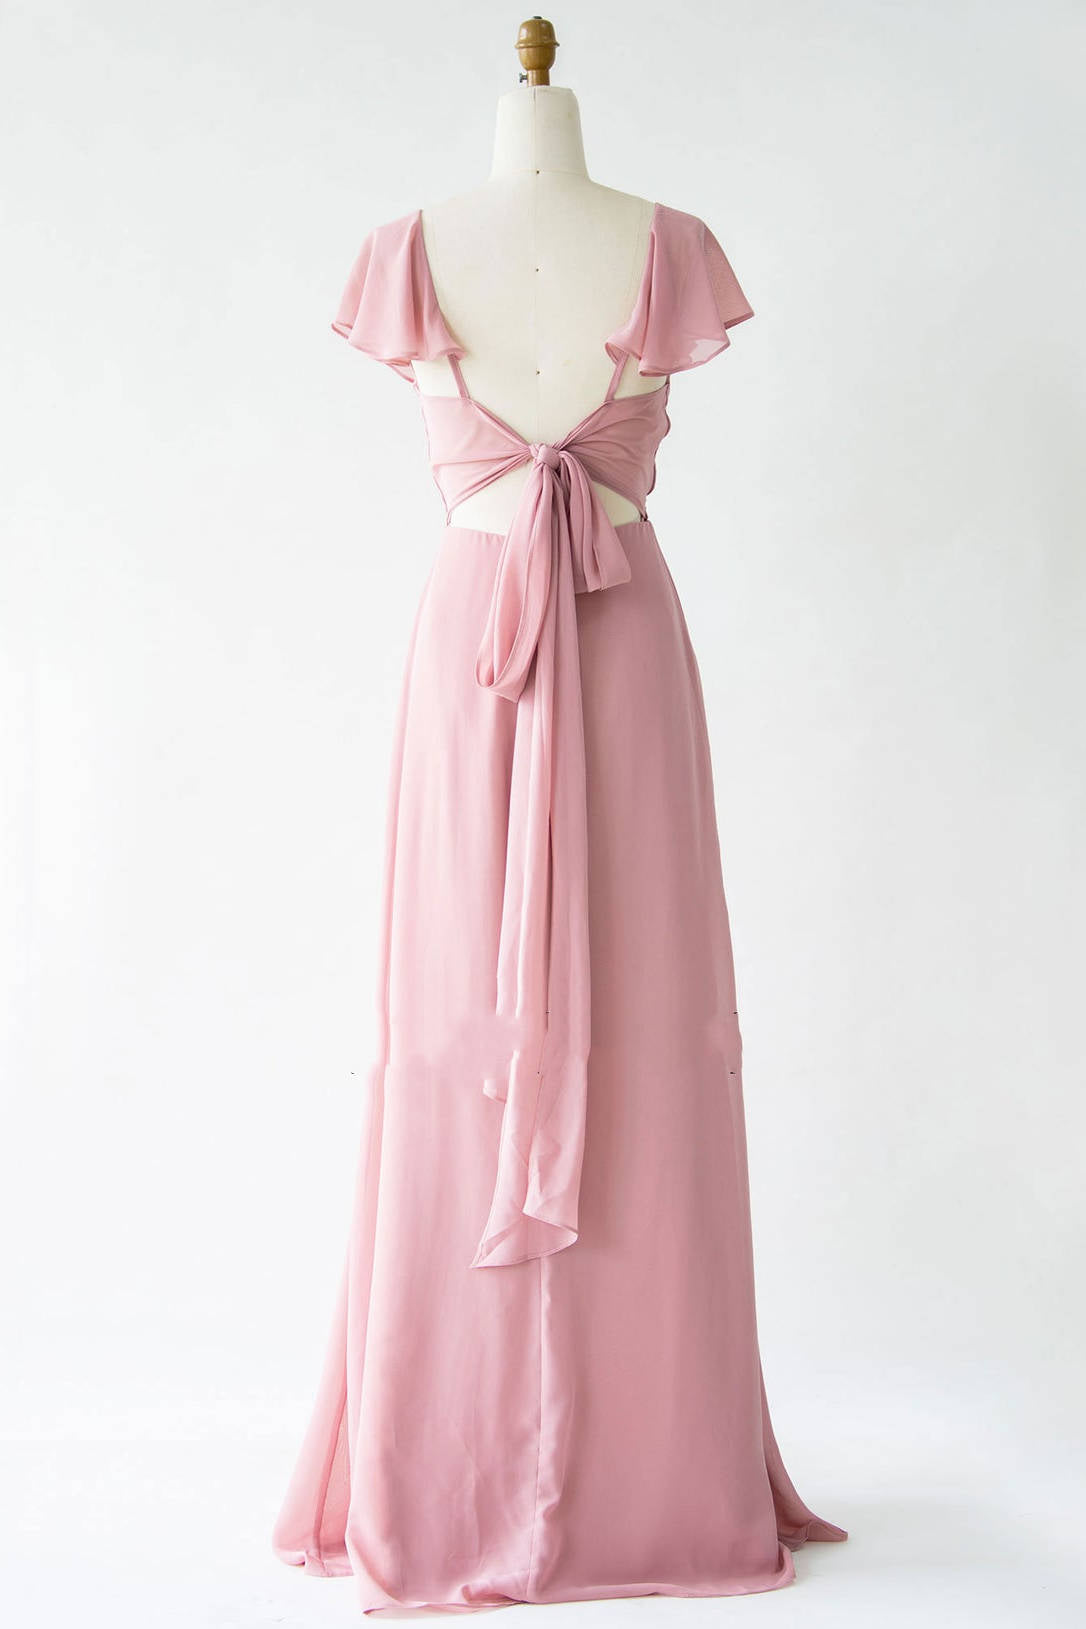 Prom Gown, V-Neck Blush Pink Chiffon Bridesmaid Dress